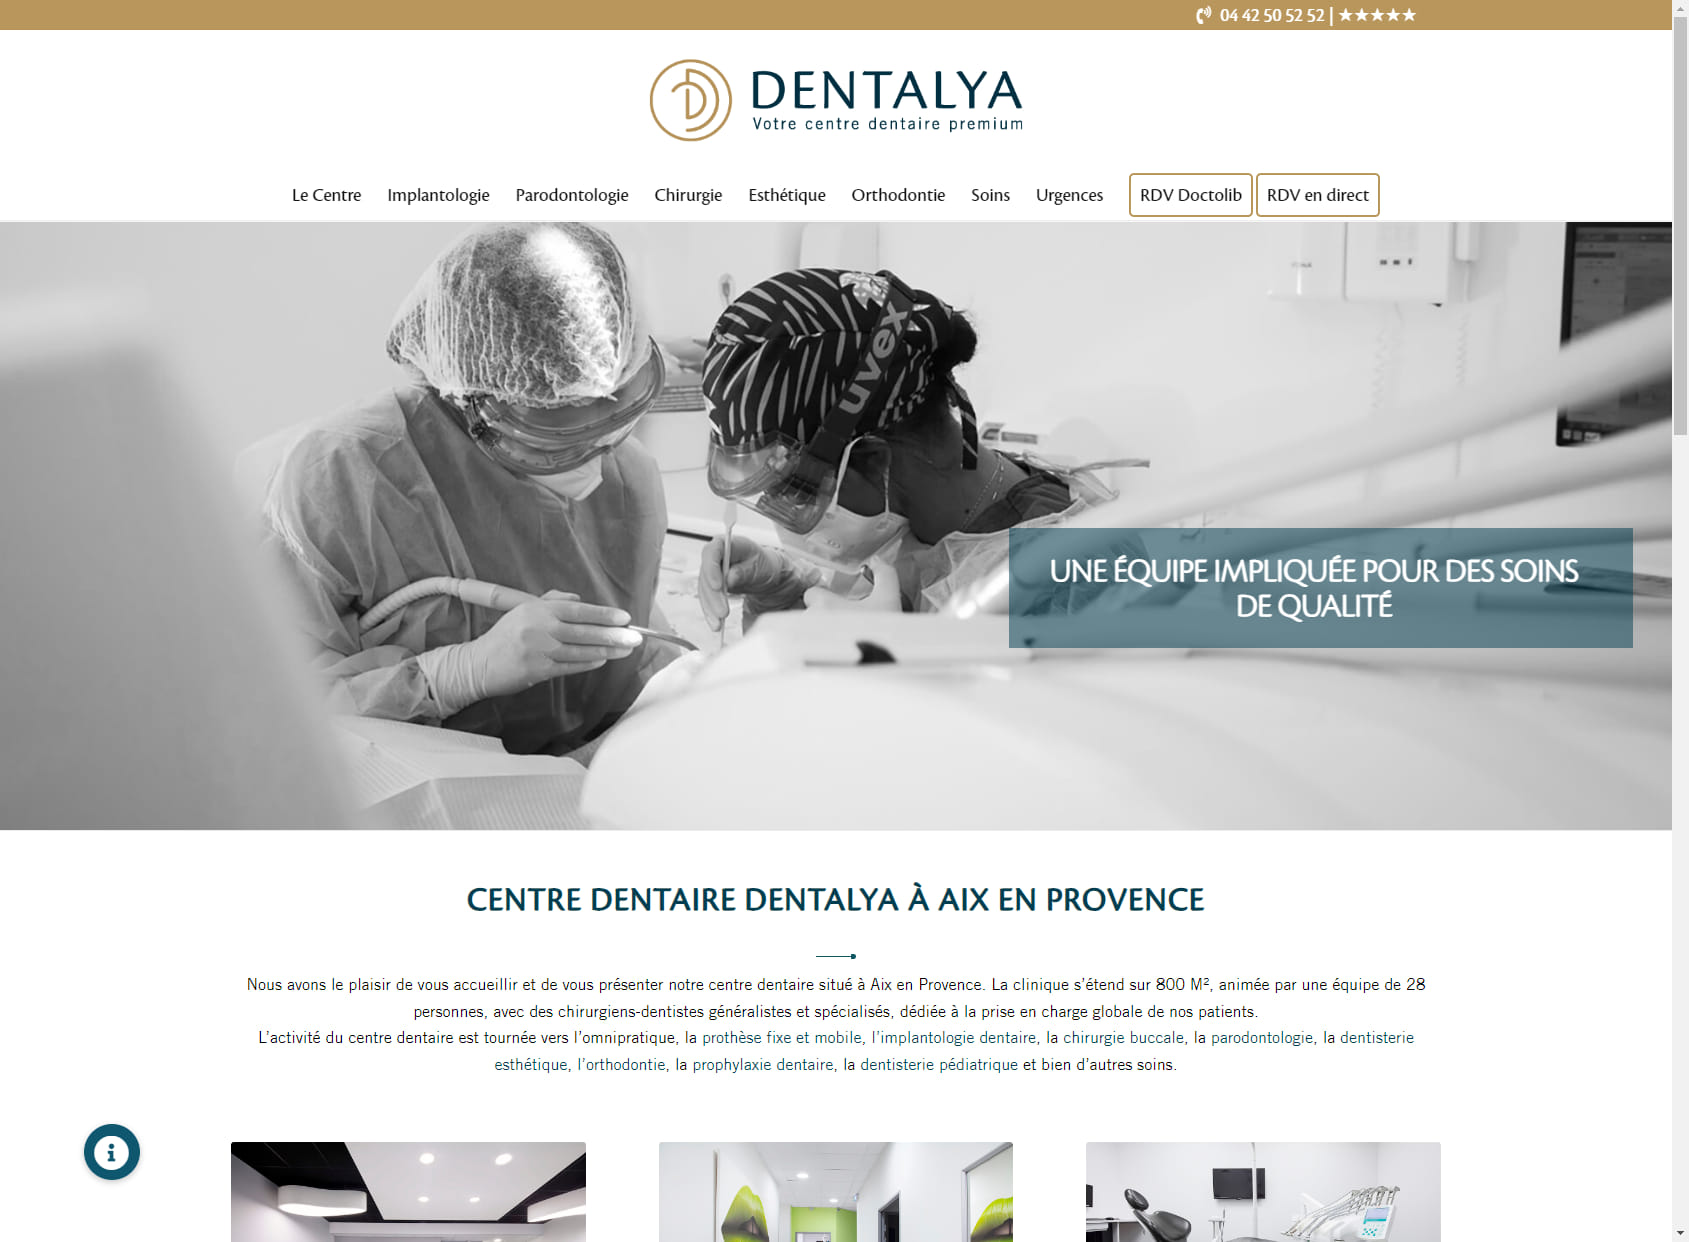 DENTALYA Dental Center